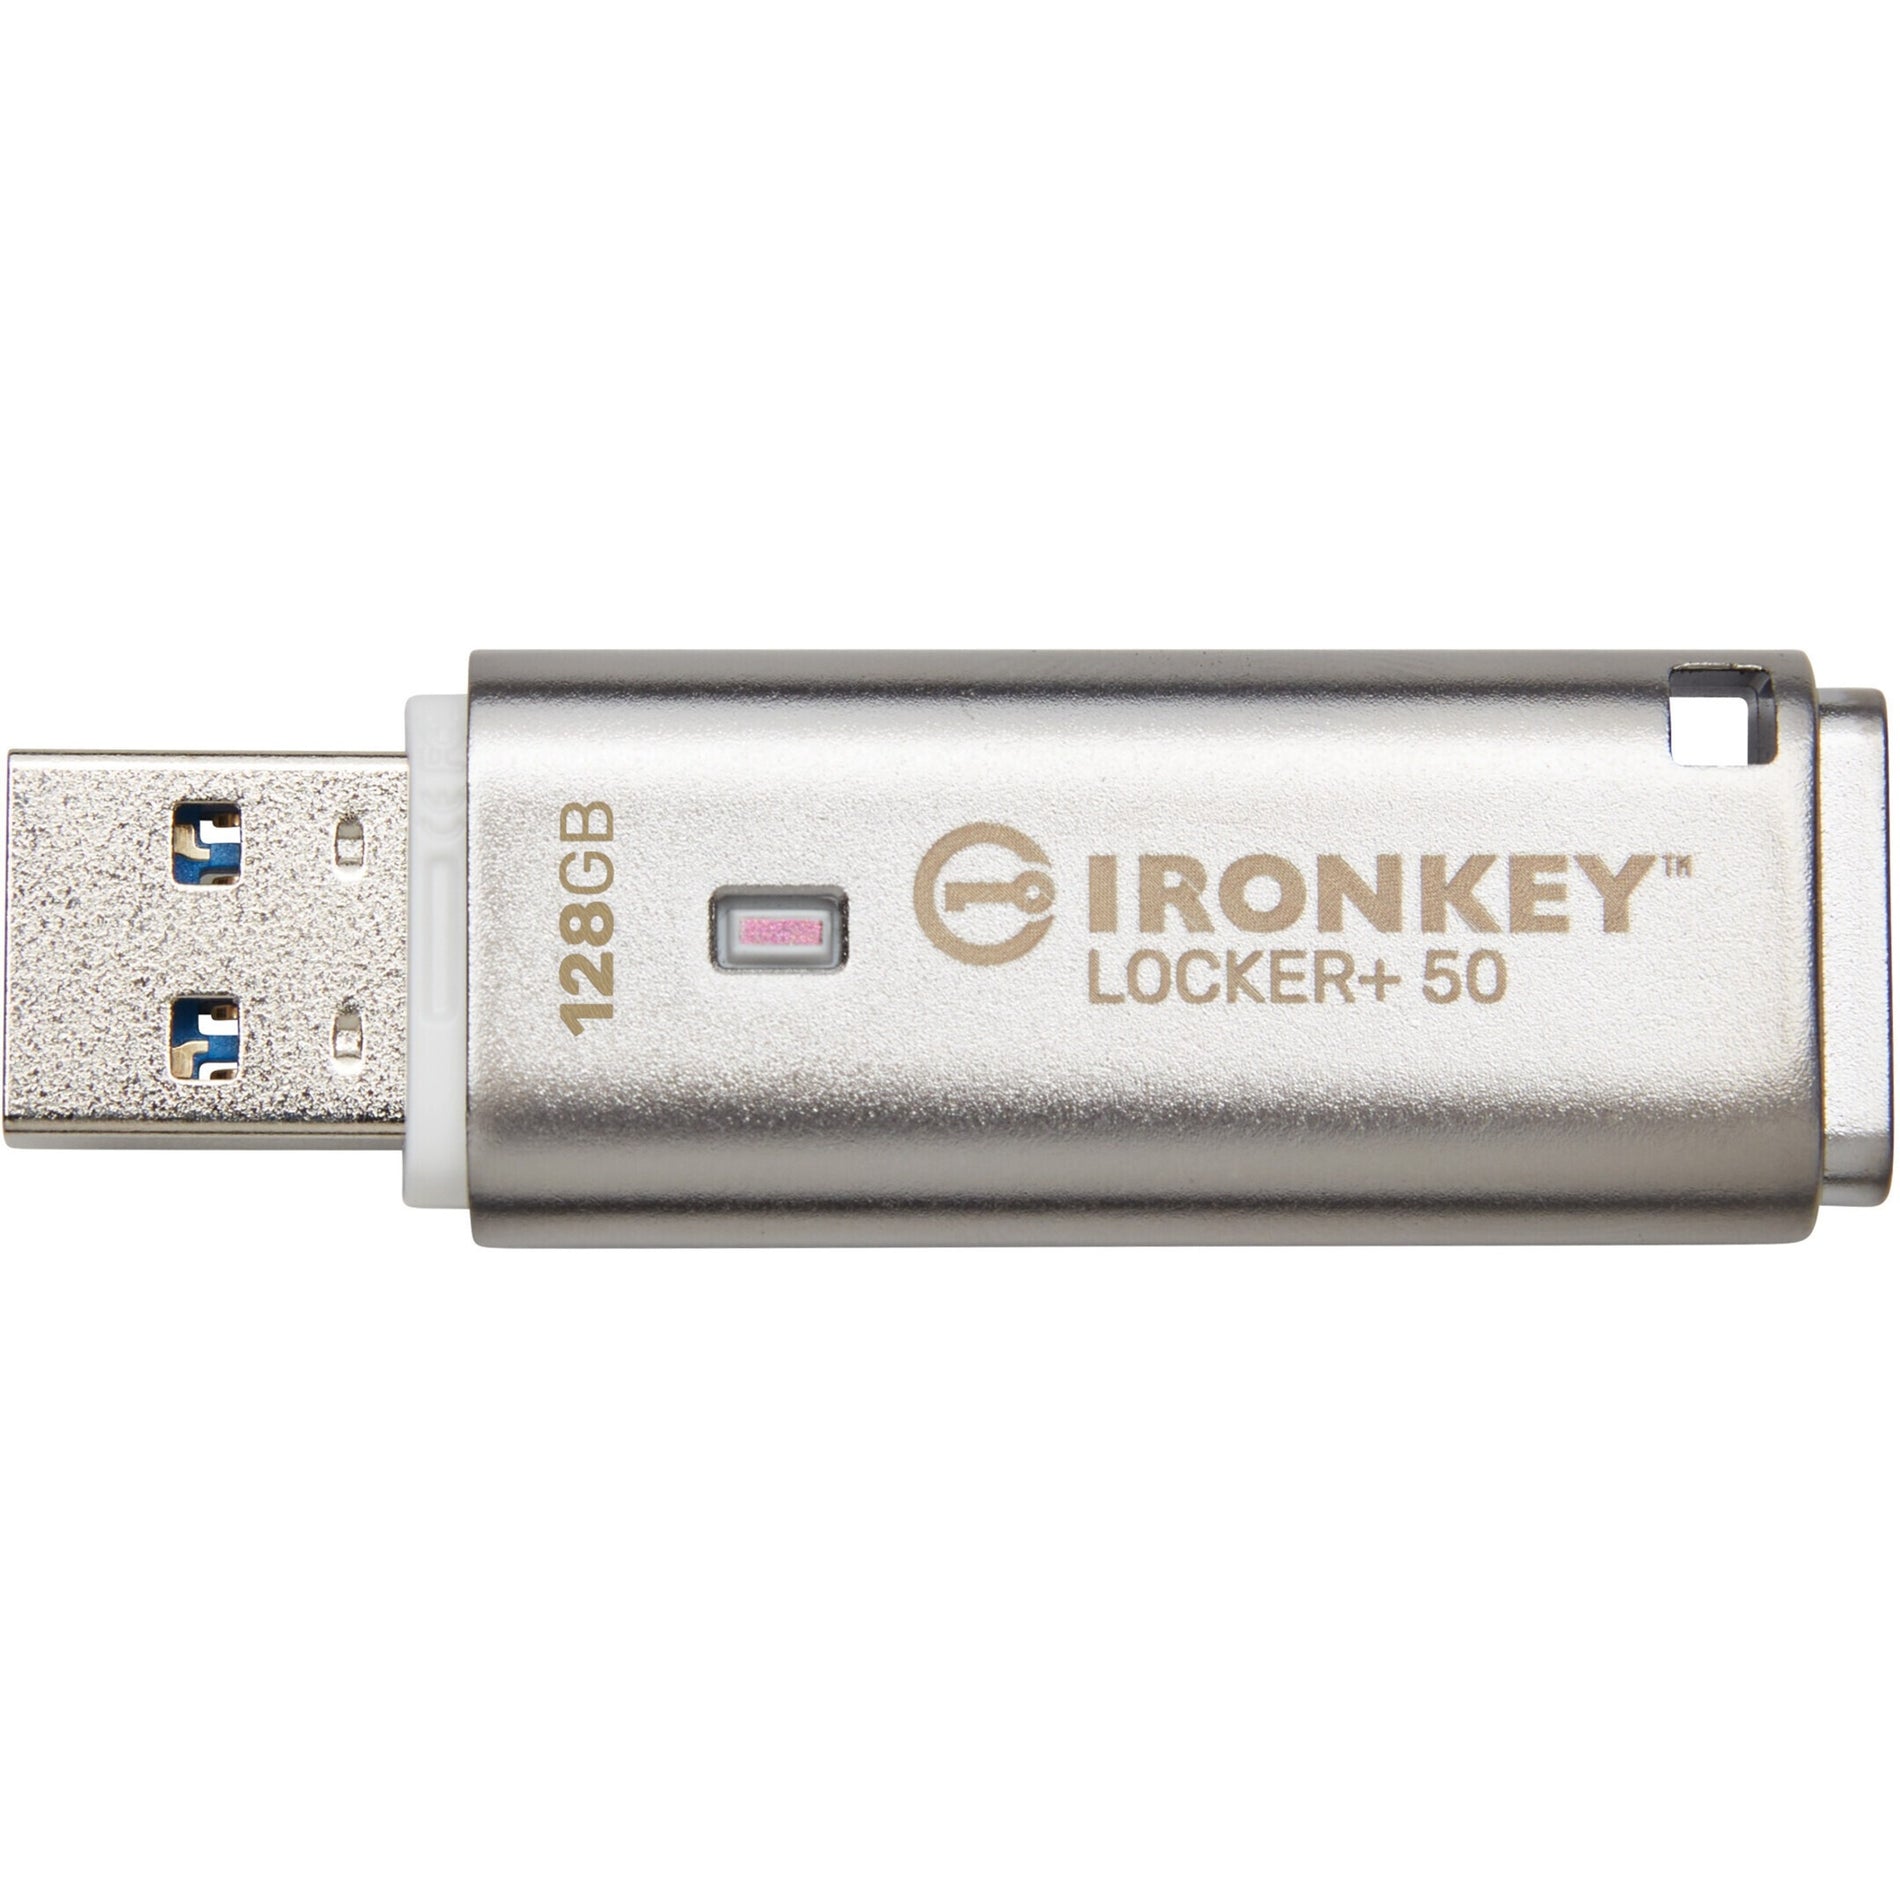 IronKey IKLP50/128GB Locker+ 50 USB Flash Drive, 128GB Storage, Hardware Encryption